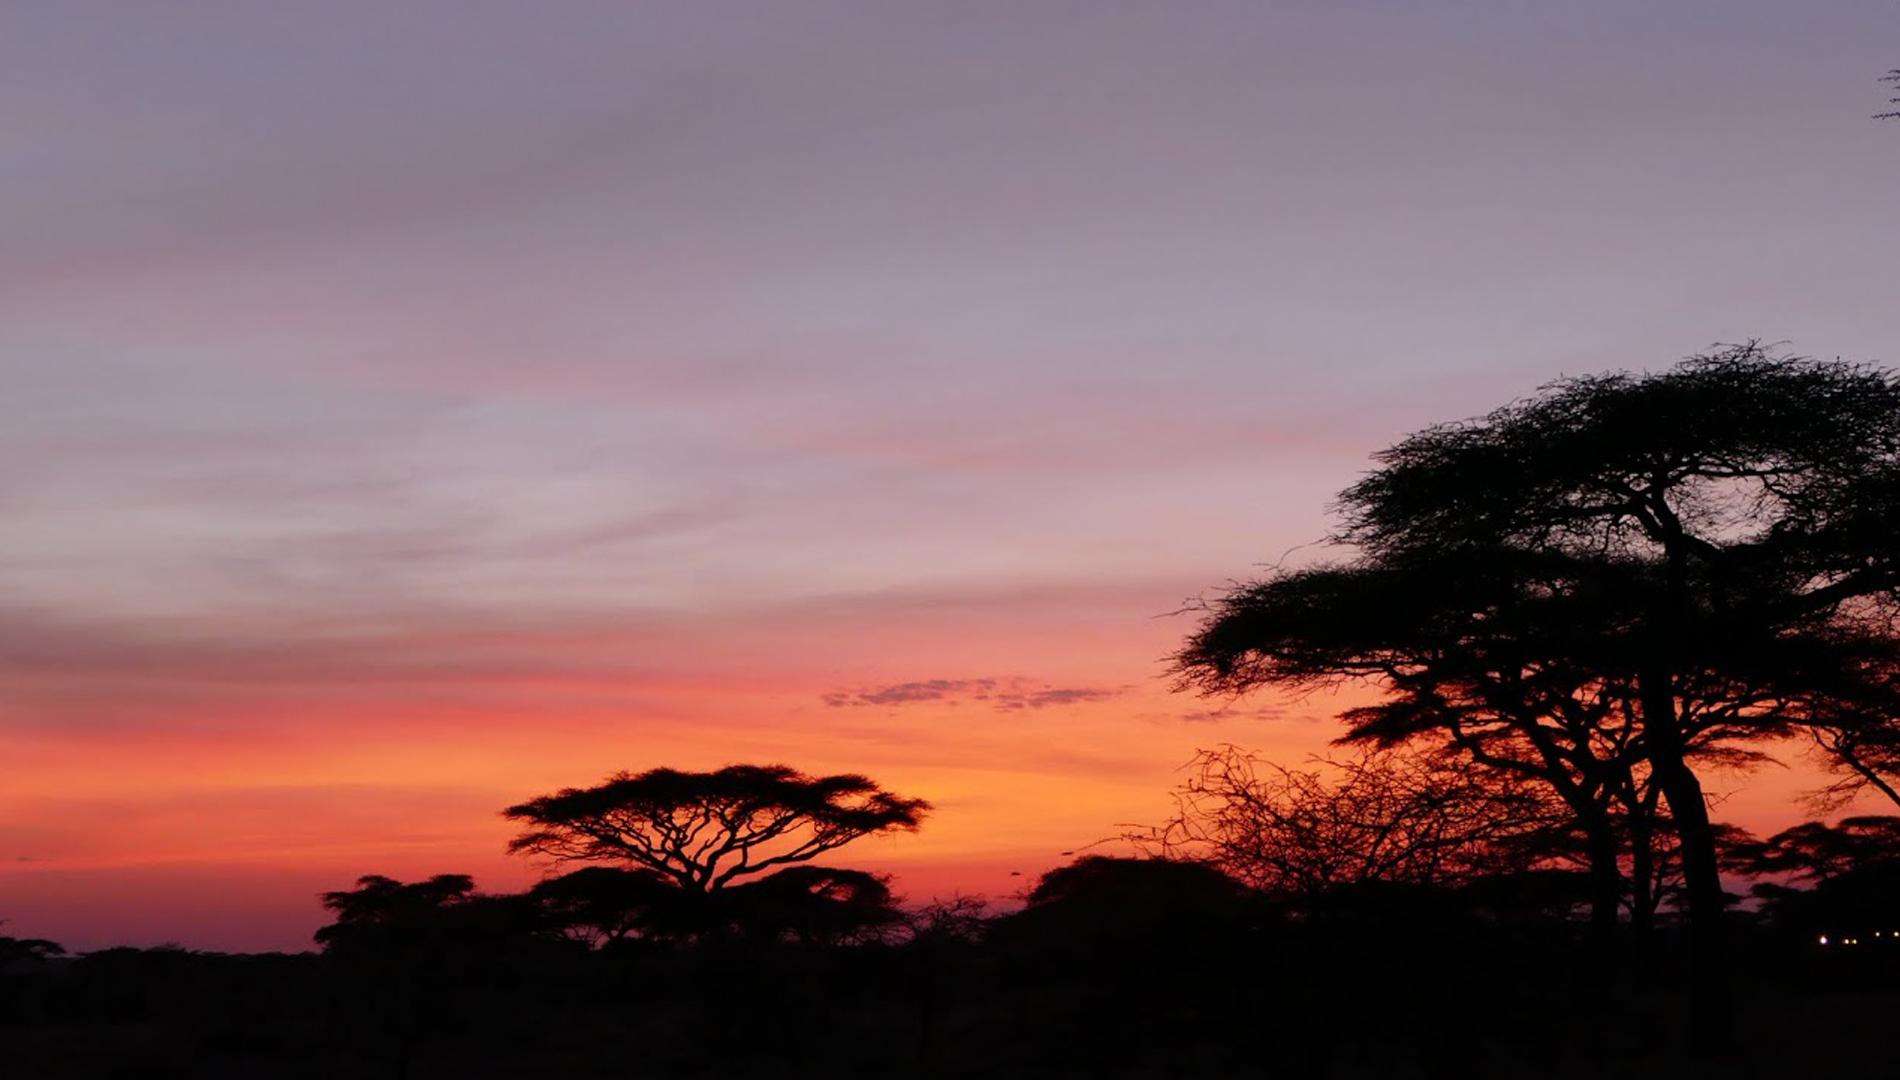 Un safari en Tanzanie : quelle aventure formidable!!